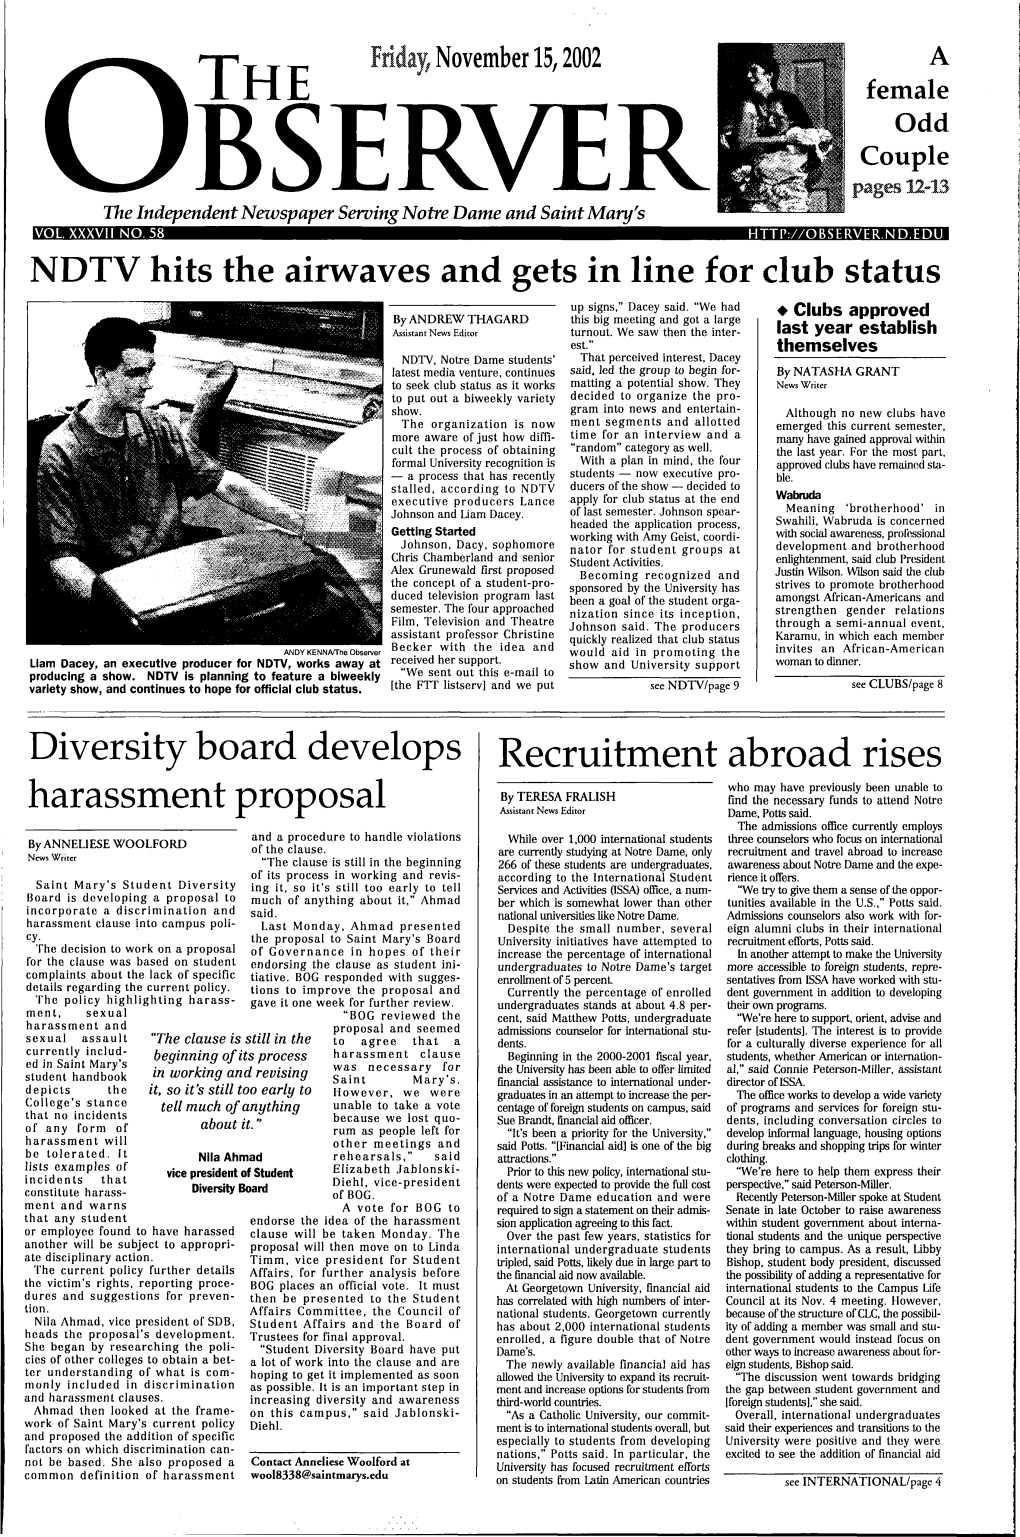 Diversity Board Develops Harassment Proposal Recruitment Abroad Rises